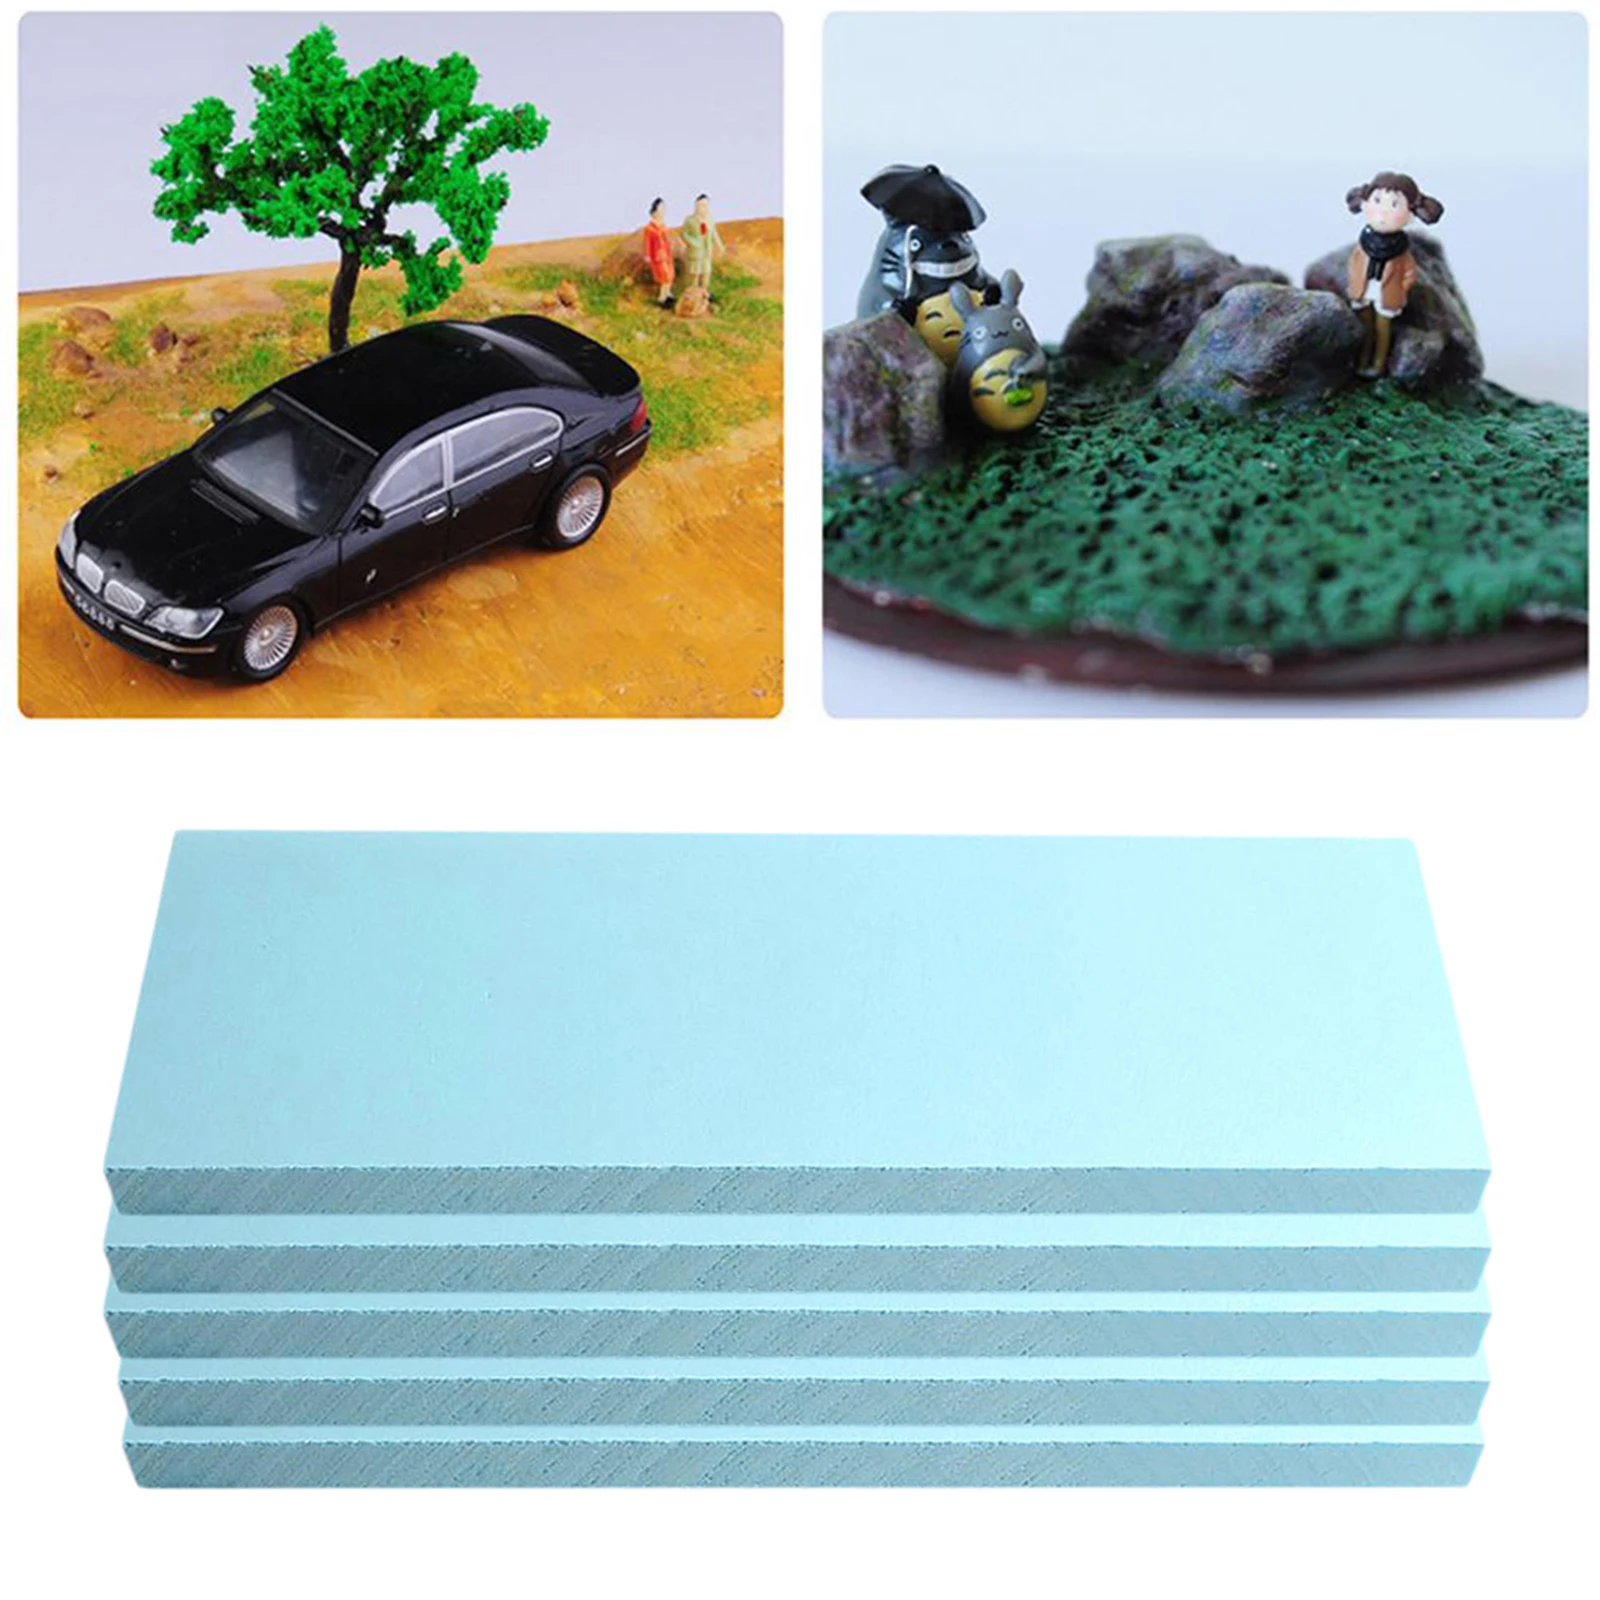 

5 Pieces Blue Foam Board Sheet Crafts Model Diorama Base Building Kit 295x100x30mm